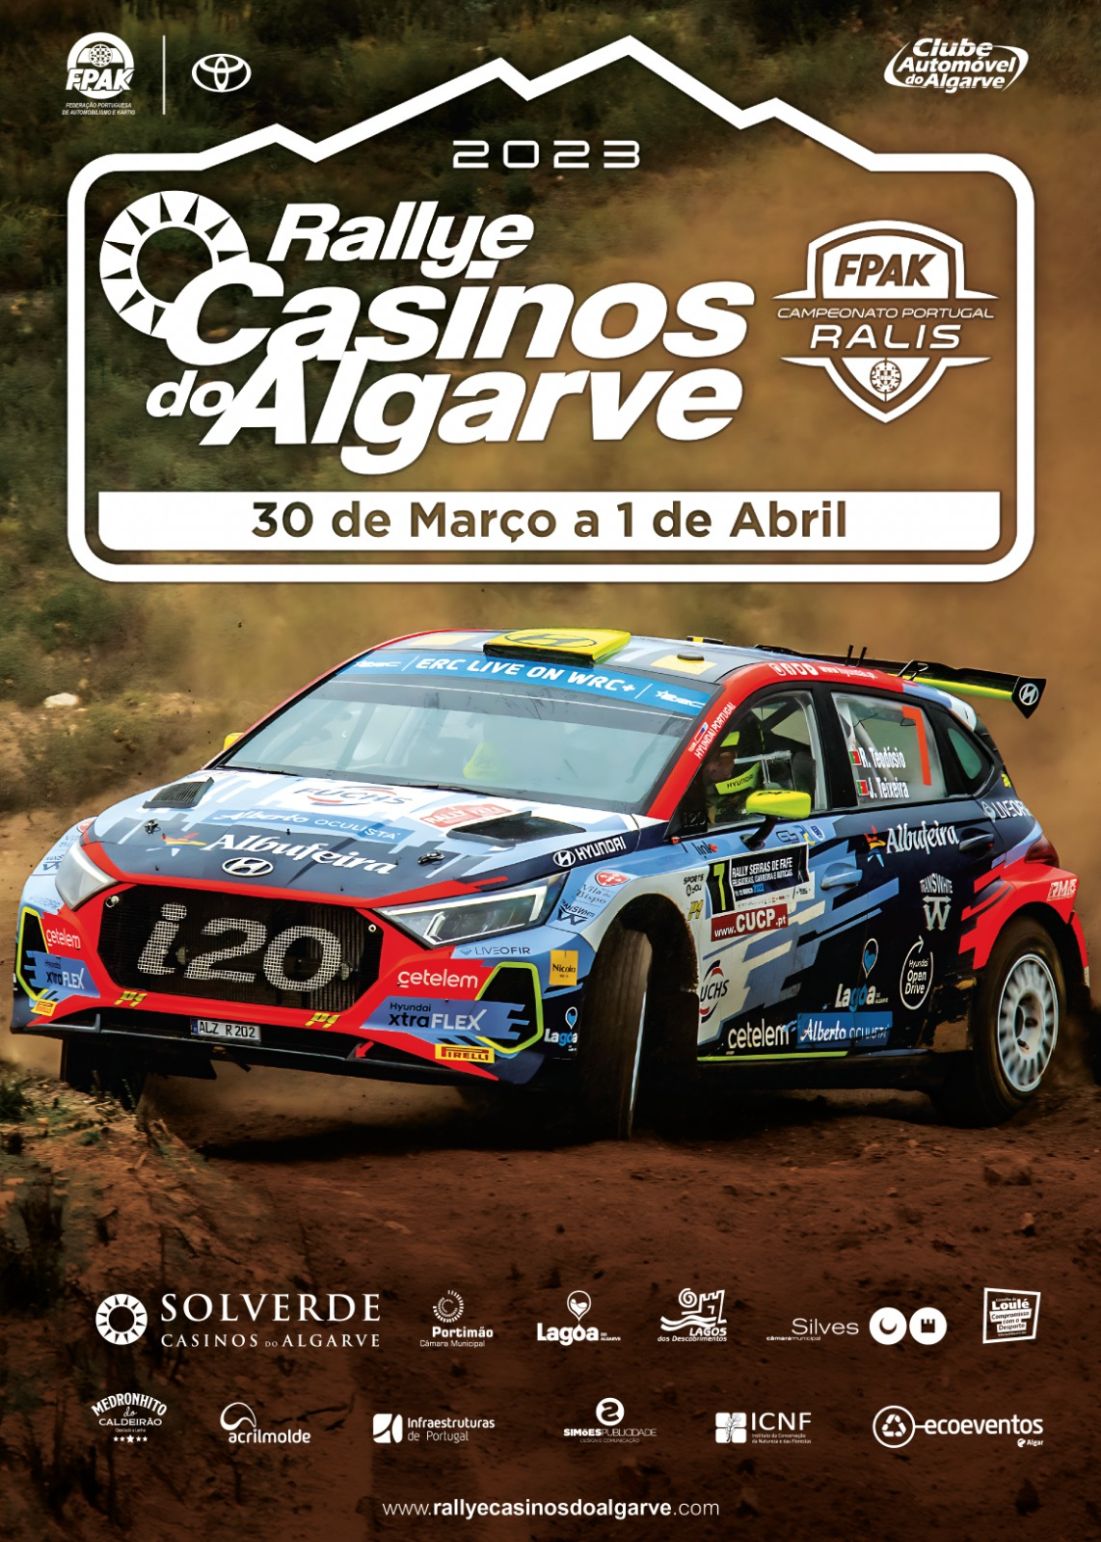 Rallye Casinos do Algarve regressa ao campeonato português de ralis e aos pisos de terra